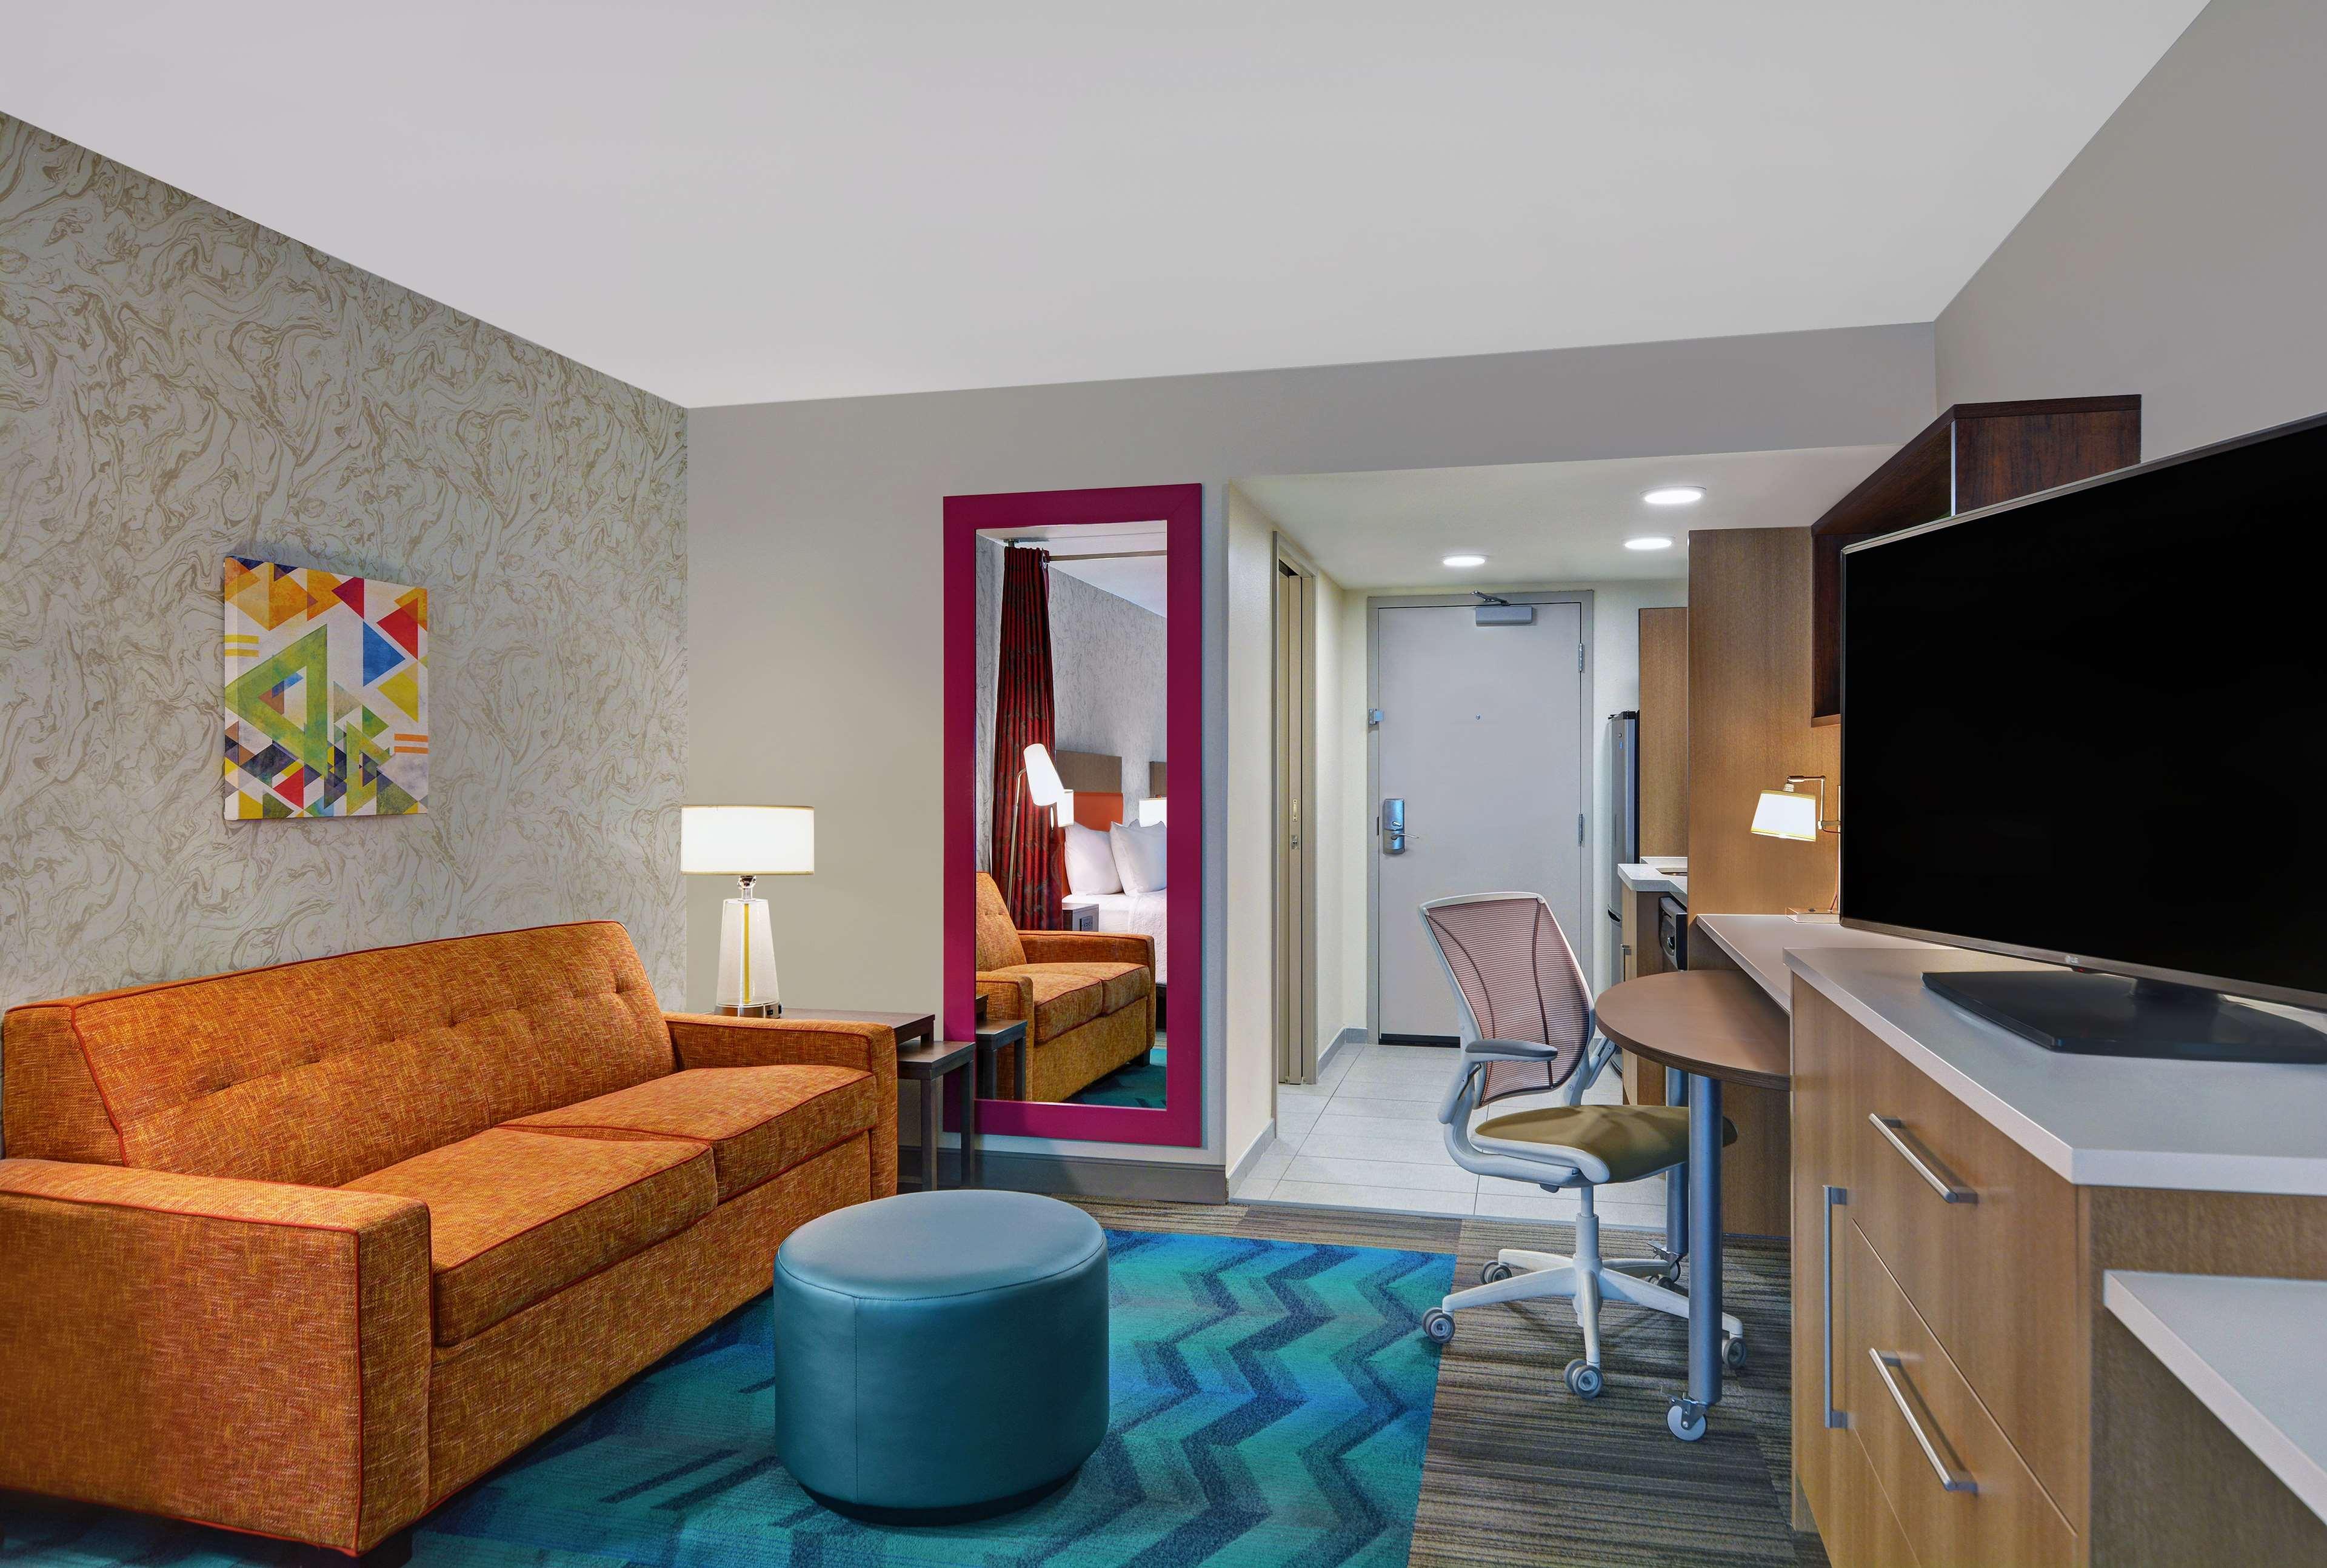 Home2 Suites by Hilton Richmond Hill, GA